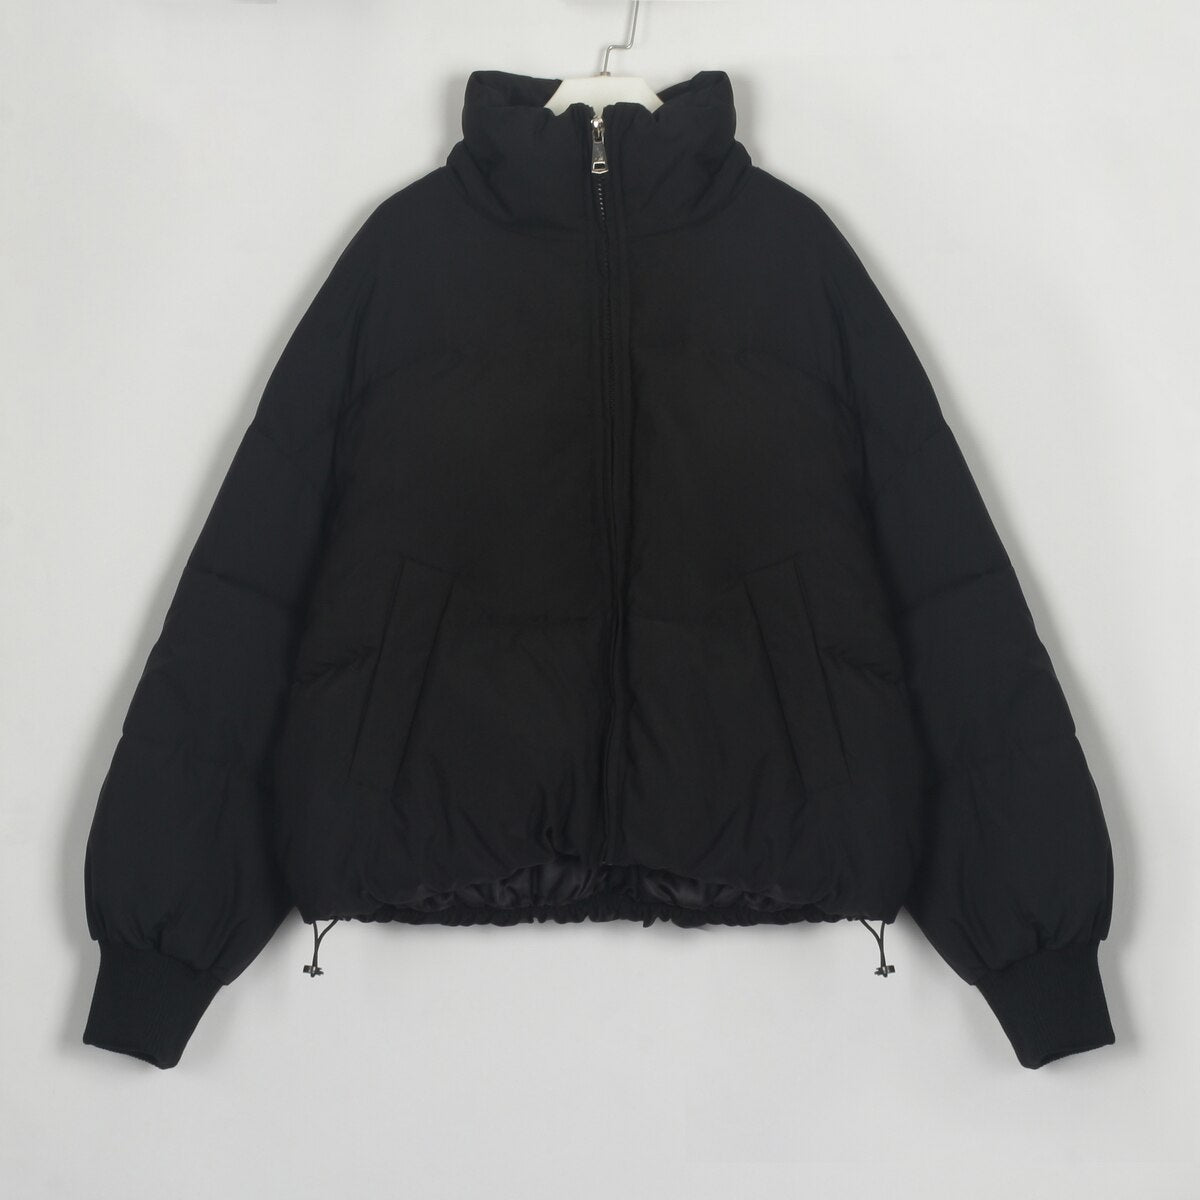 Women Thick Winter Parkas Casual Warm Cotton Jackets Coat Female Classic Zipper Outwear Autumn Street Wear